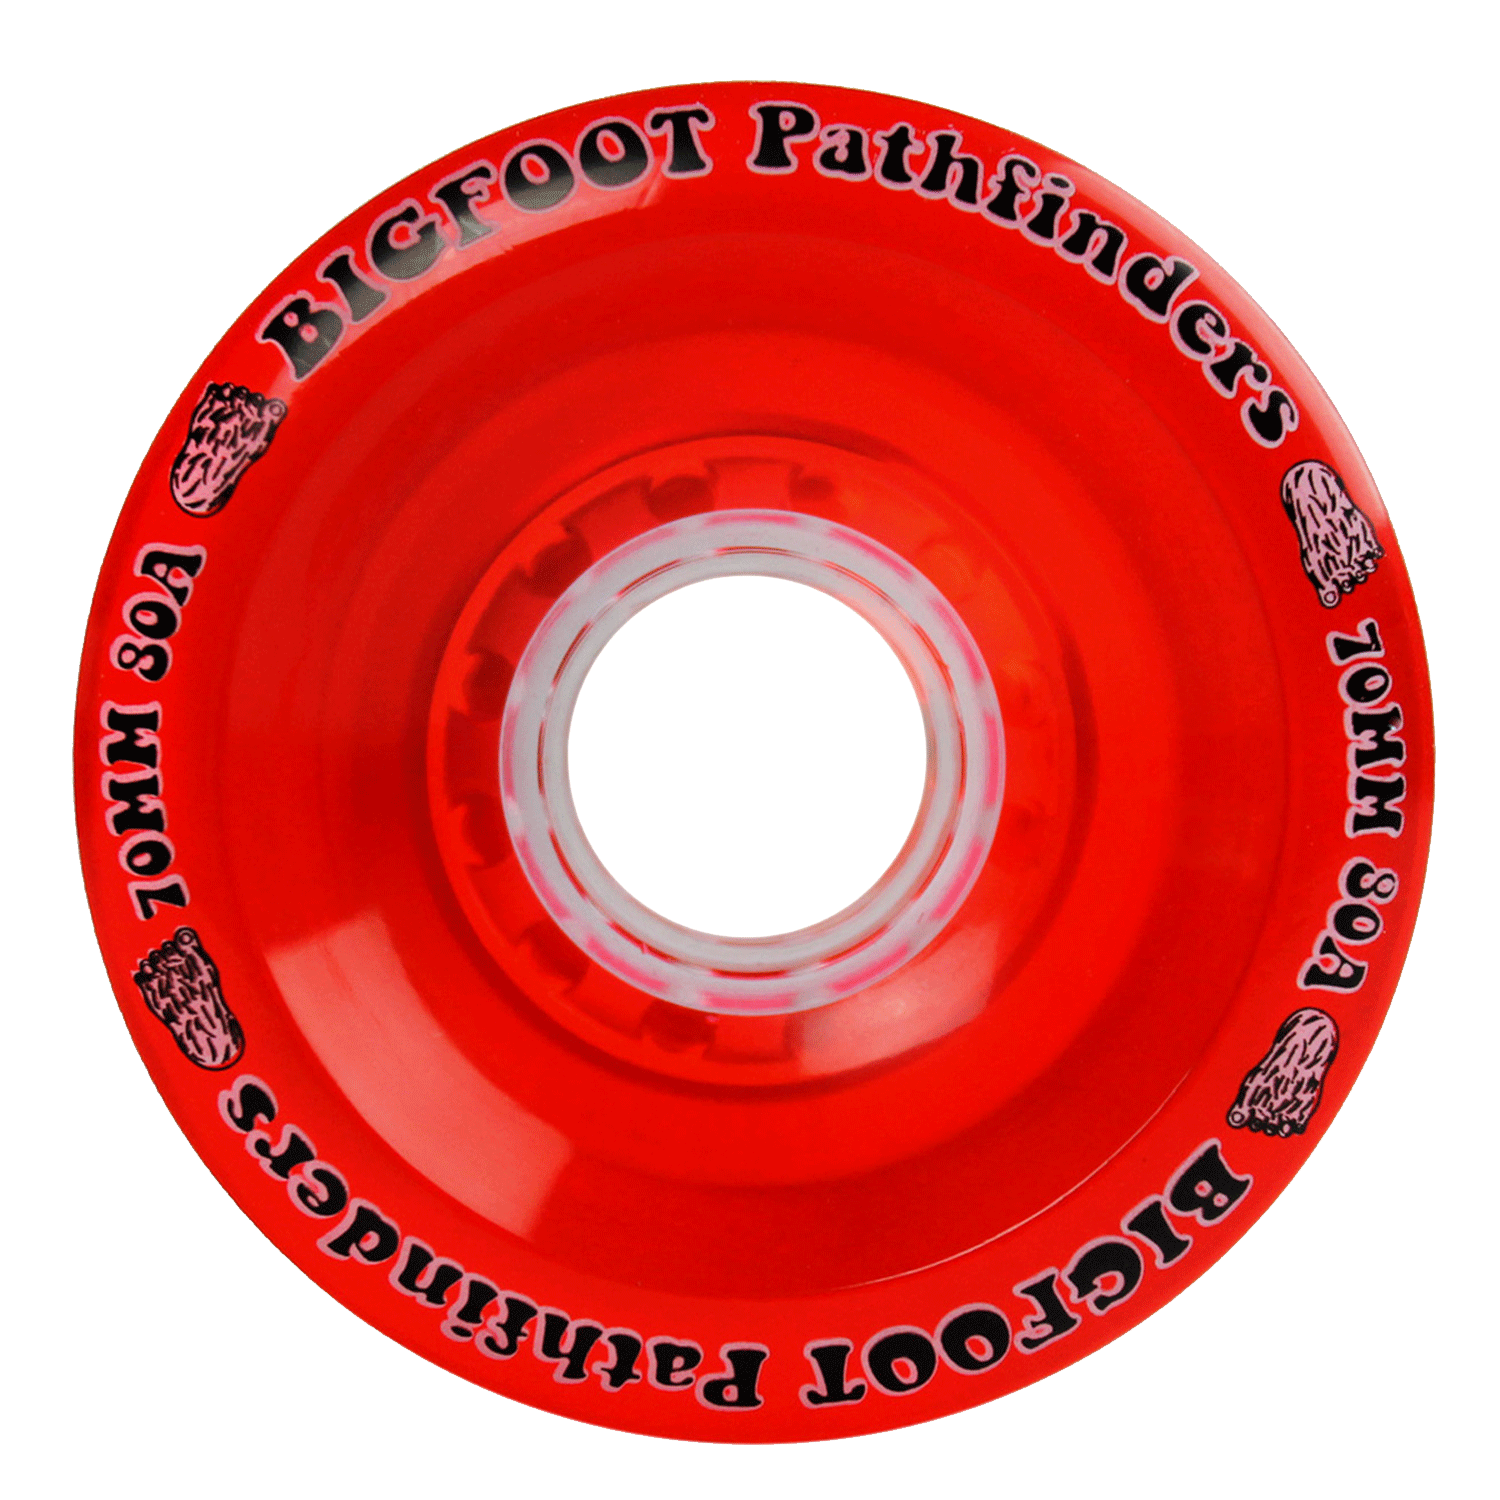 Bigfoot Pathfinder Longboard Wheels Red 70mm 80A